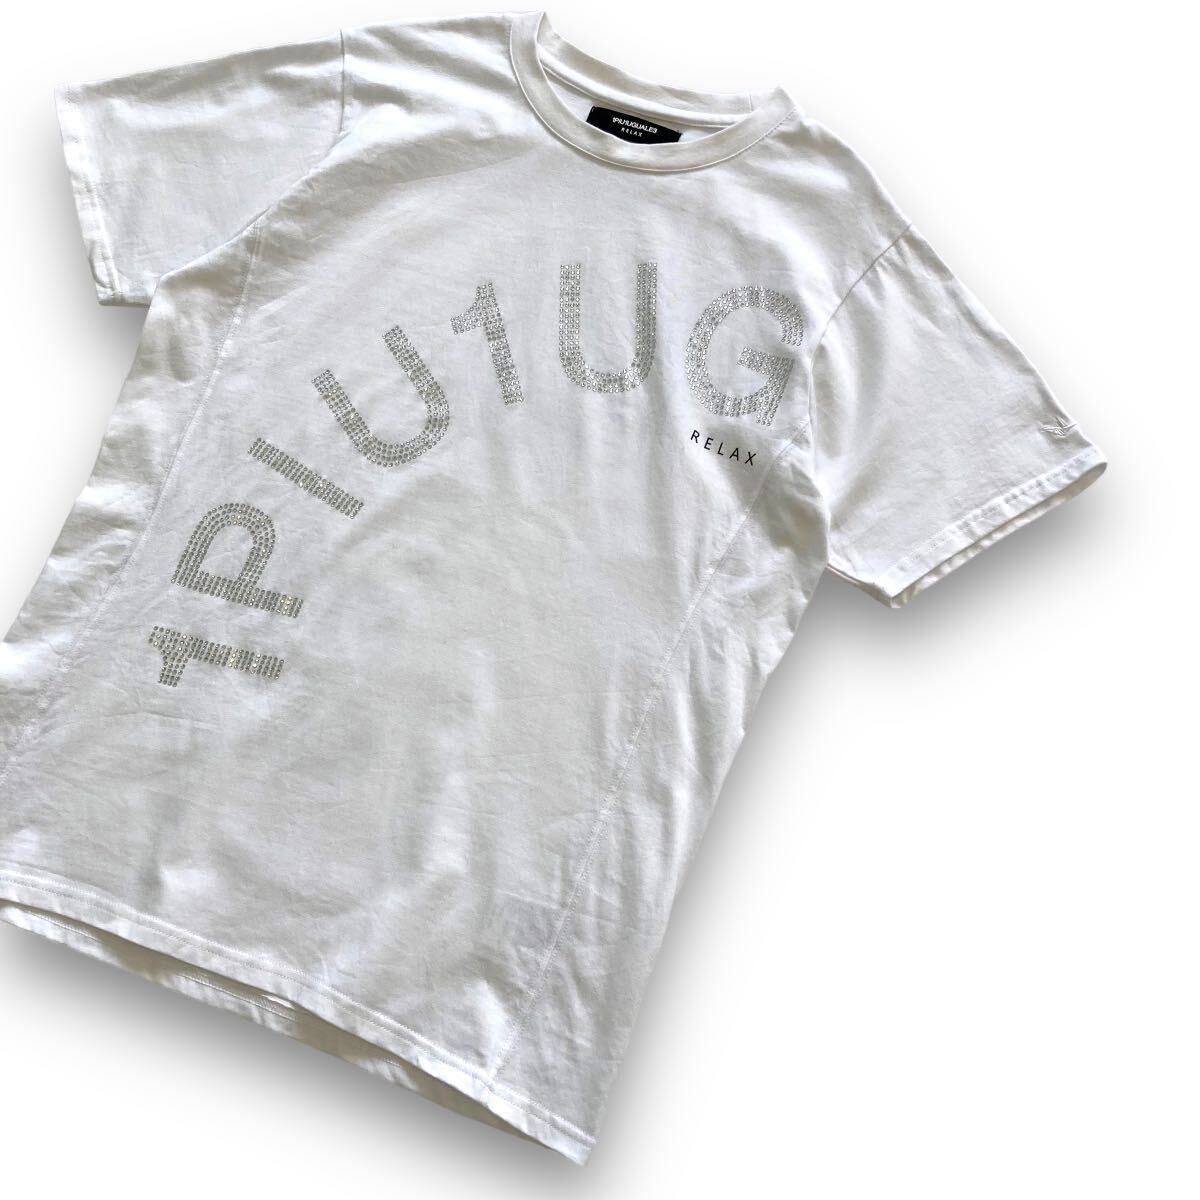 【1PIU1UGUALE3 RELAX】ウノピュウノウグァーレトレリラックス ストーンロゴ 半袖Tシャツ tシャツ ワンポイント刺繍ロゴ 白 ホワイト (L)_画像3